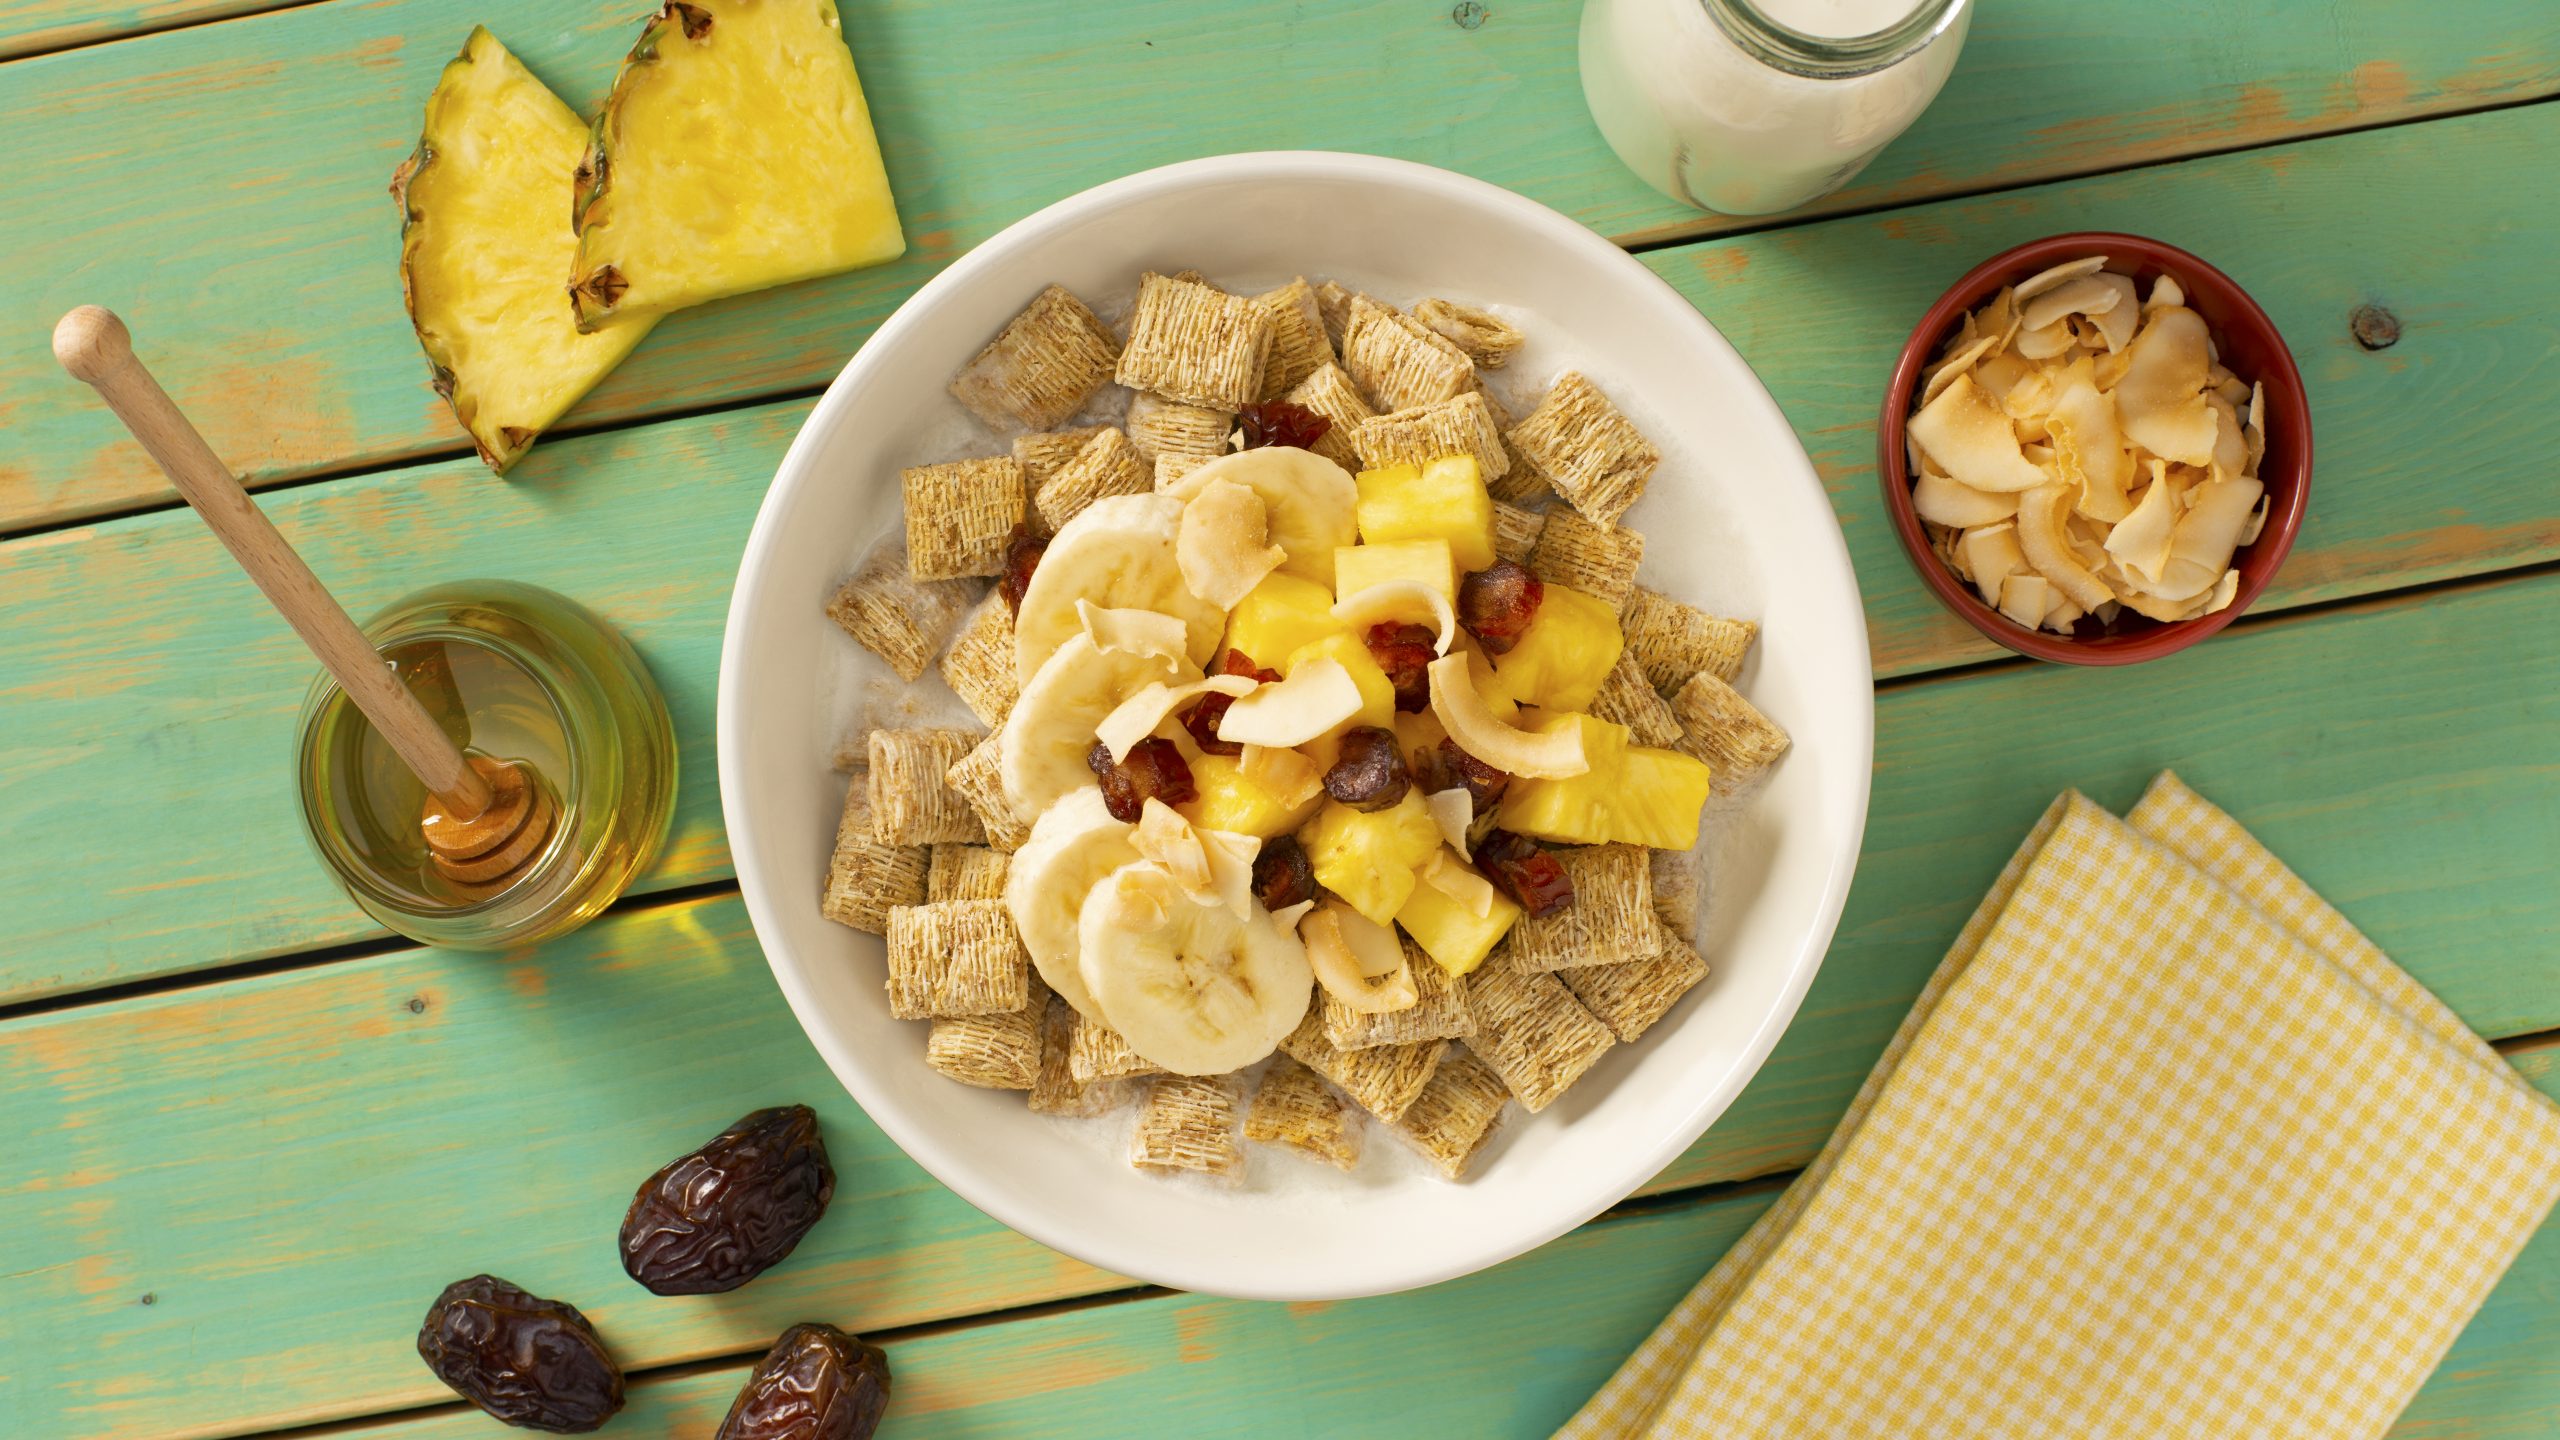 Pina Colada Breakfast Bowl with raisins, banana slices, and pineapple slicers.